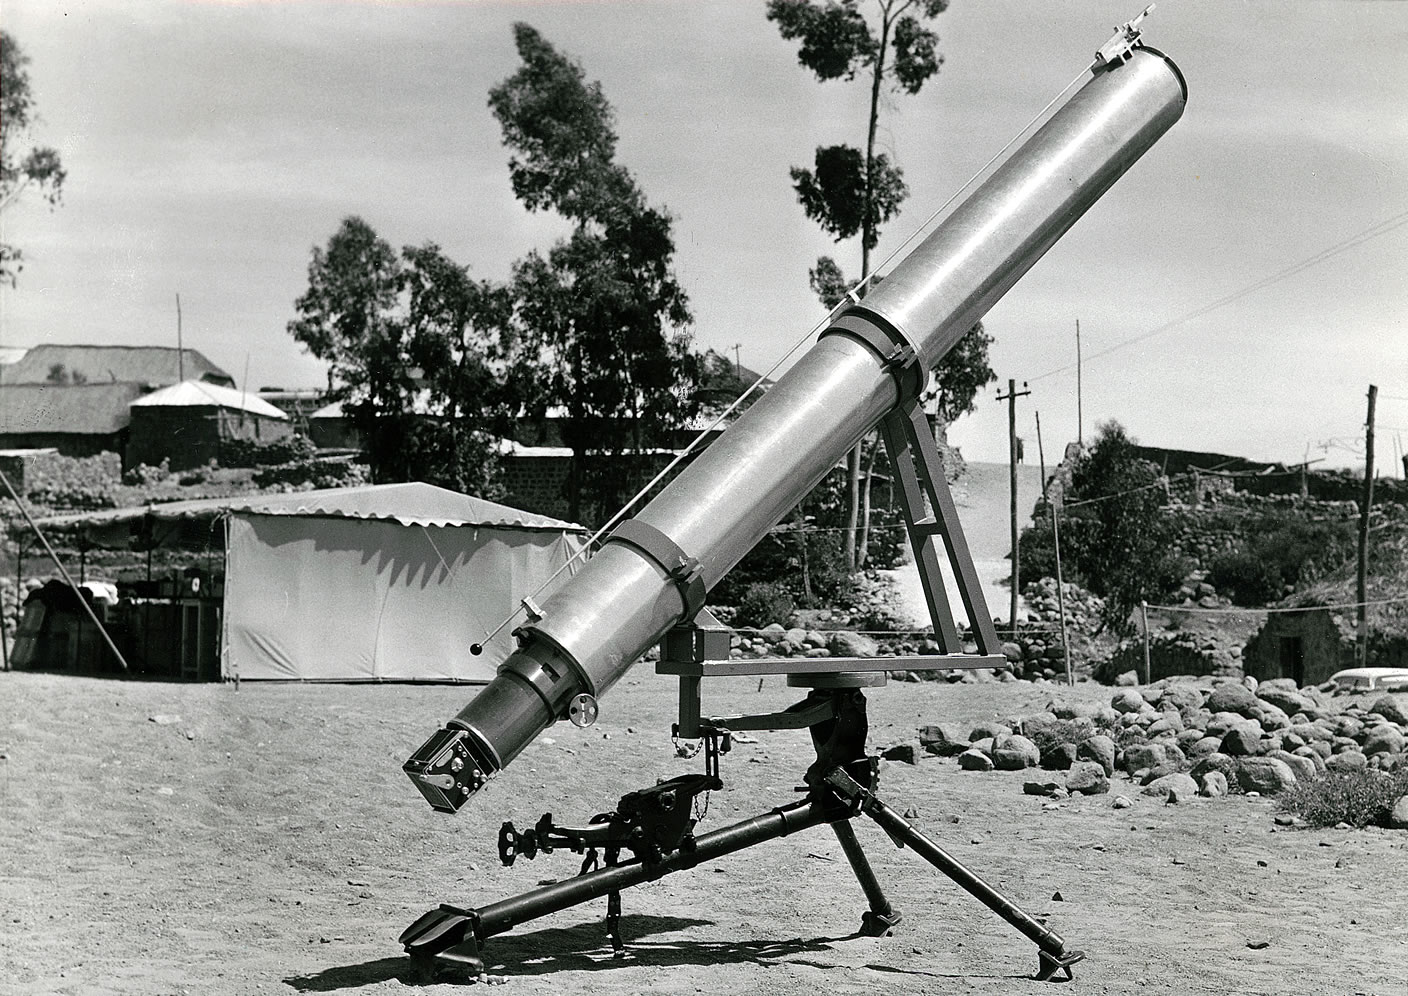 Image of a telescope